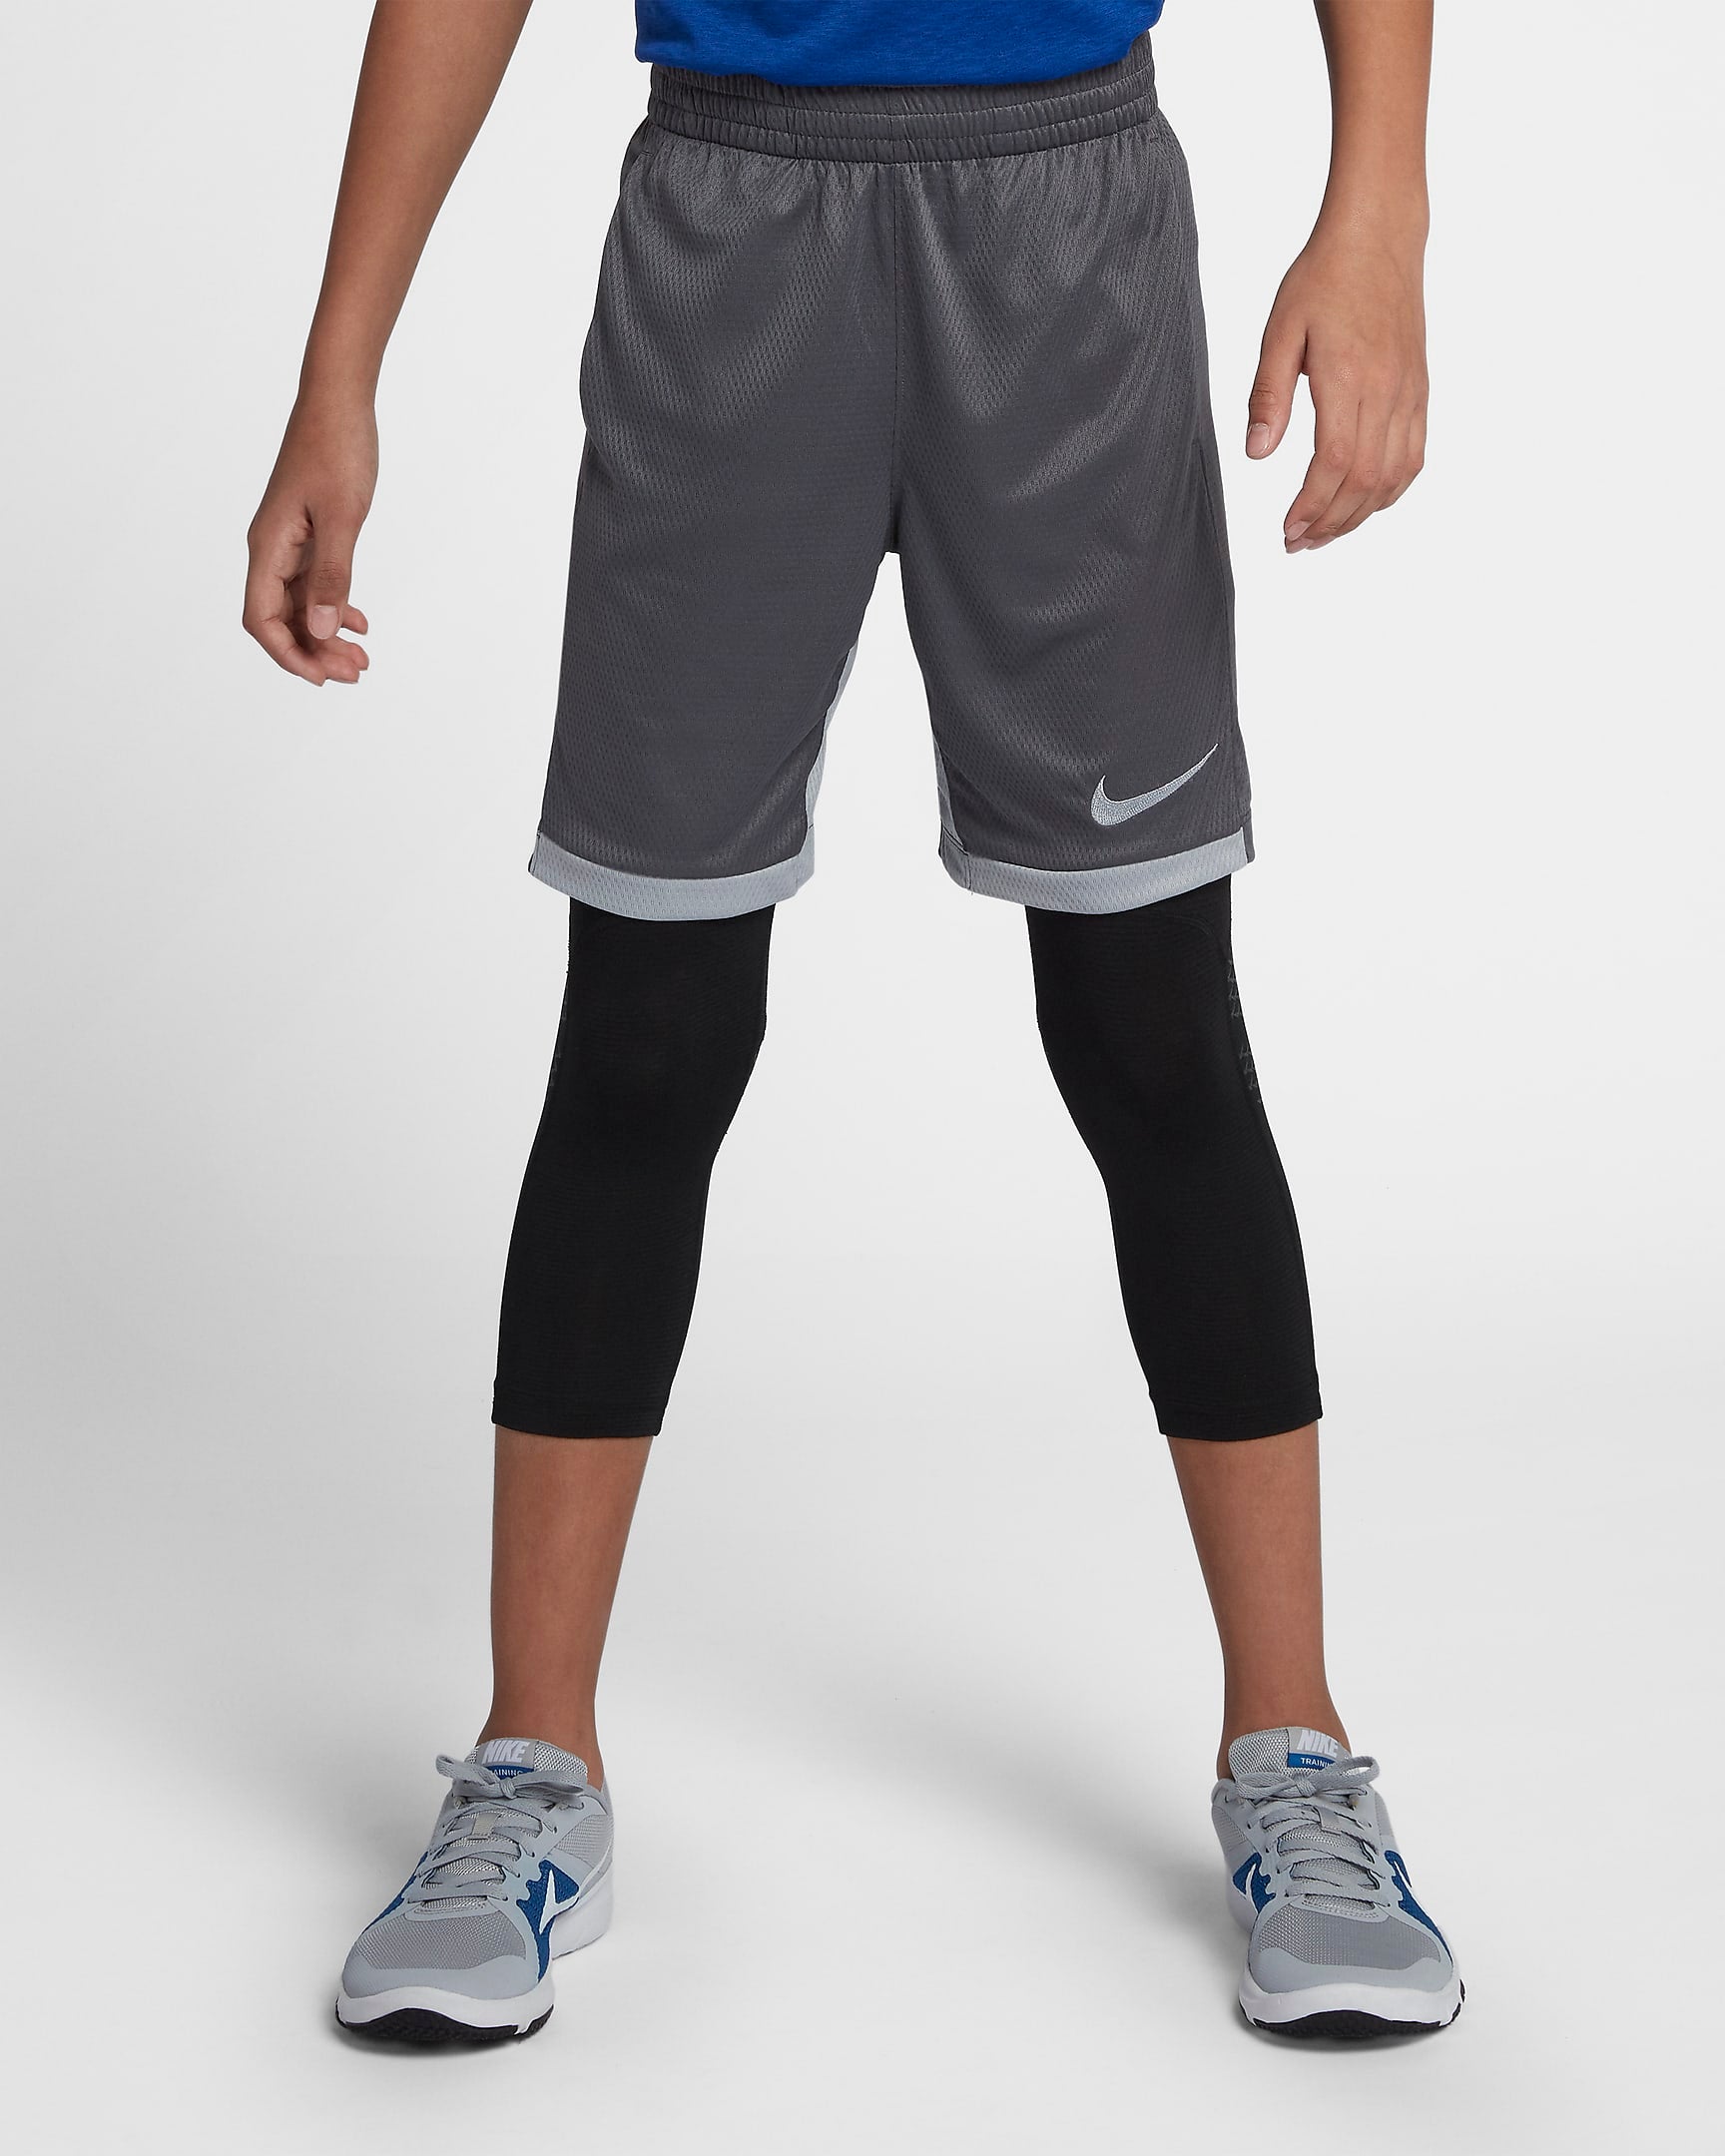 Nike Dri-FIT Trophy Shorts - 939655